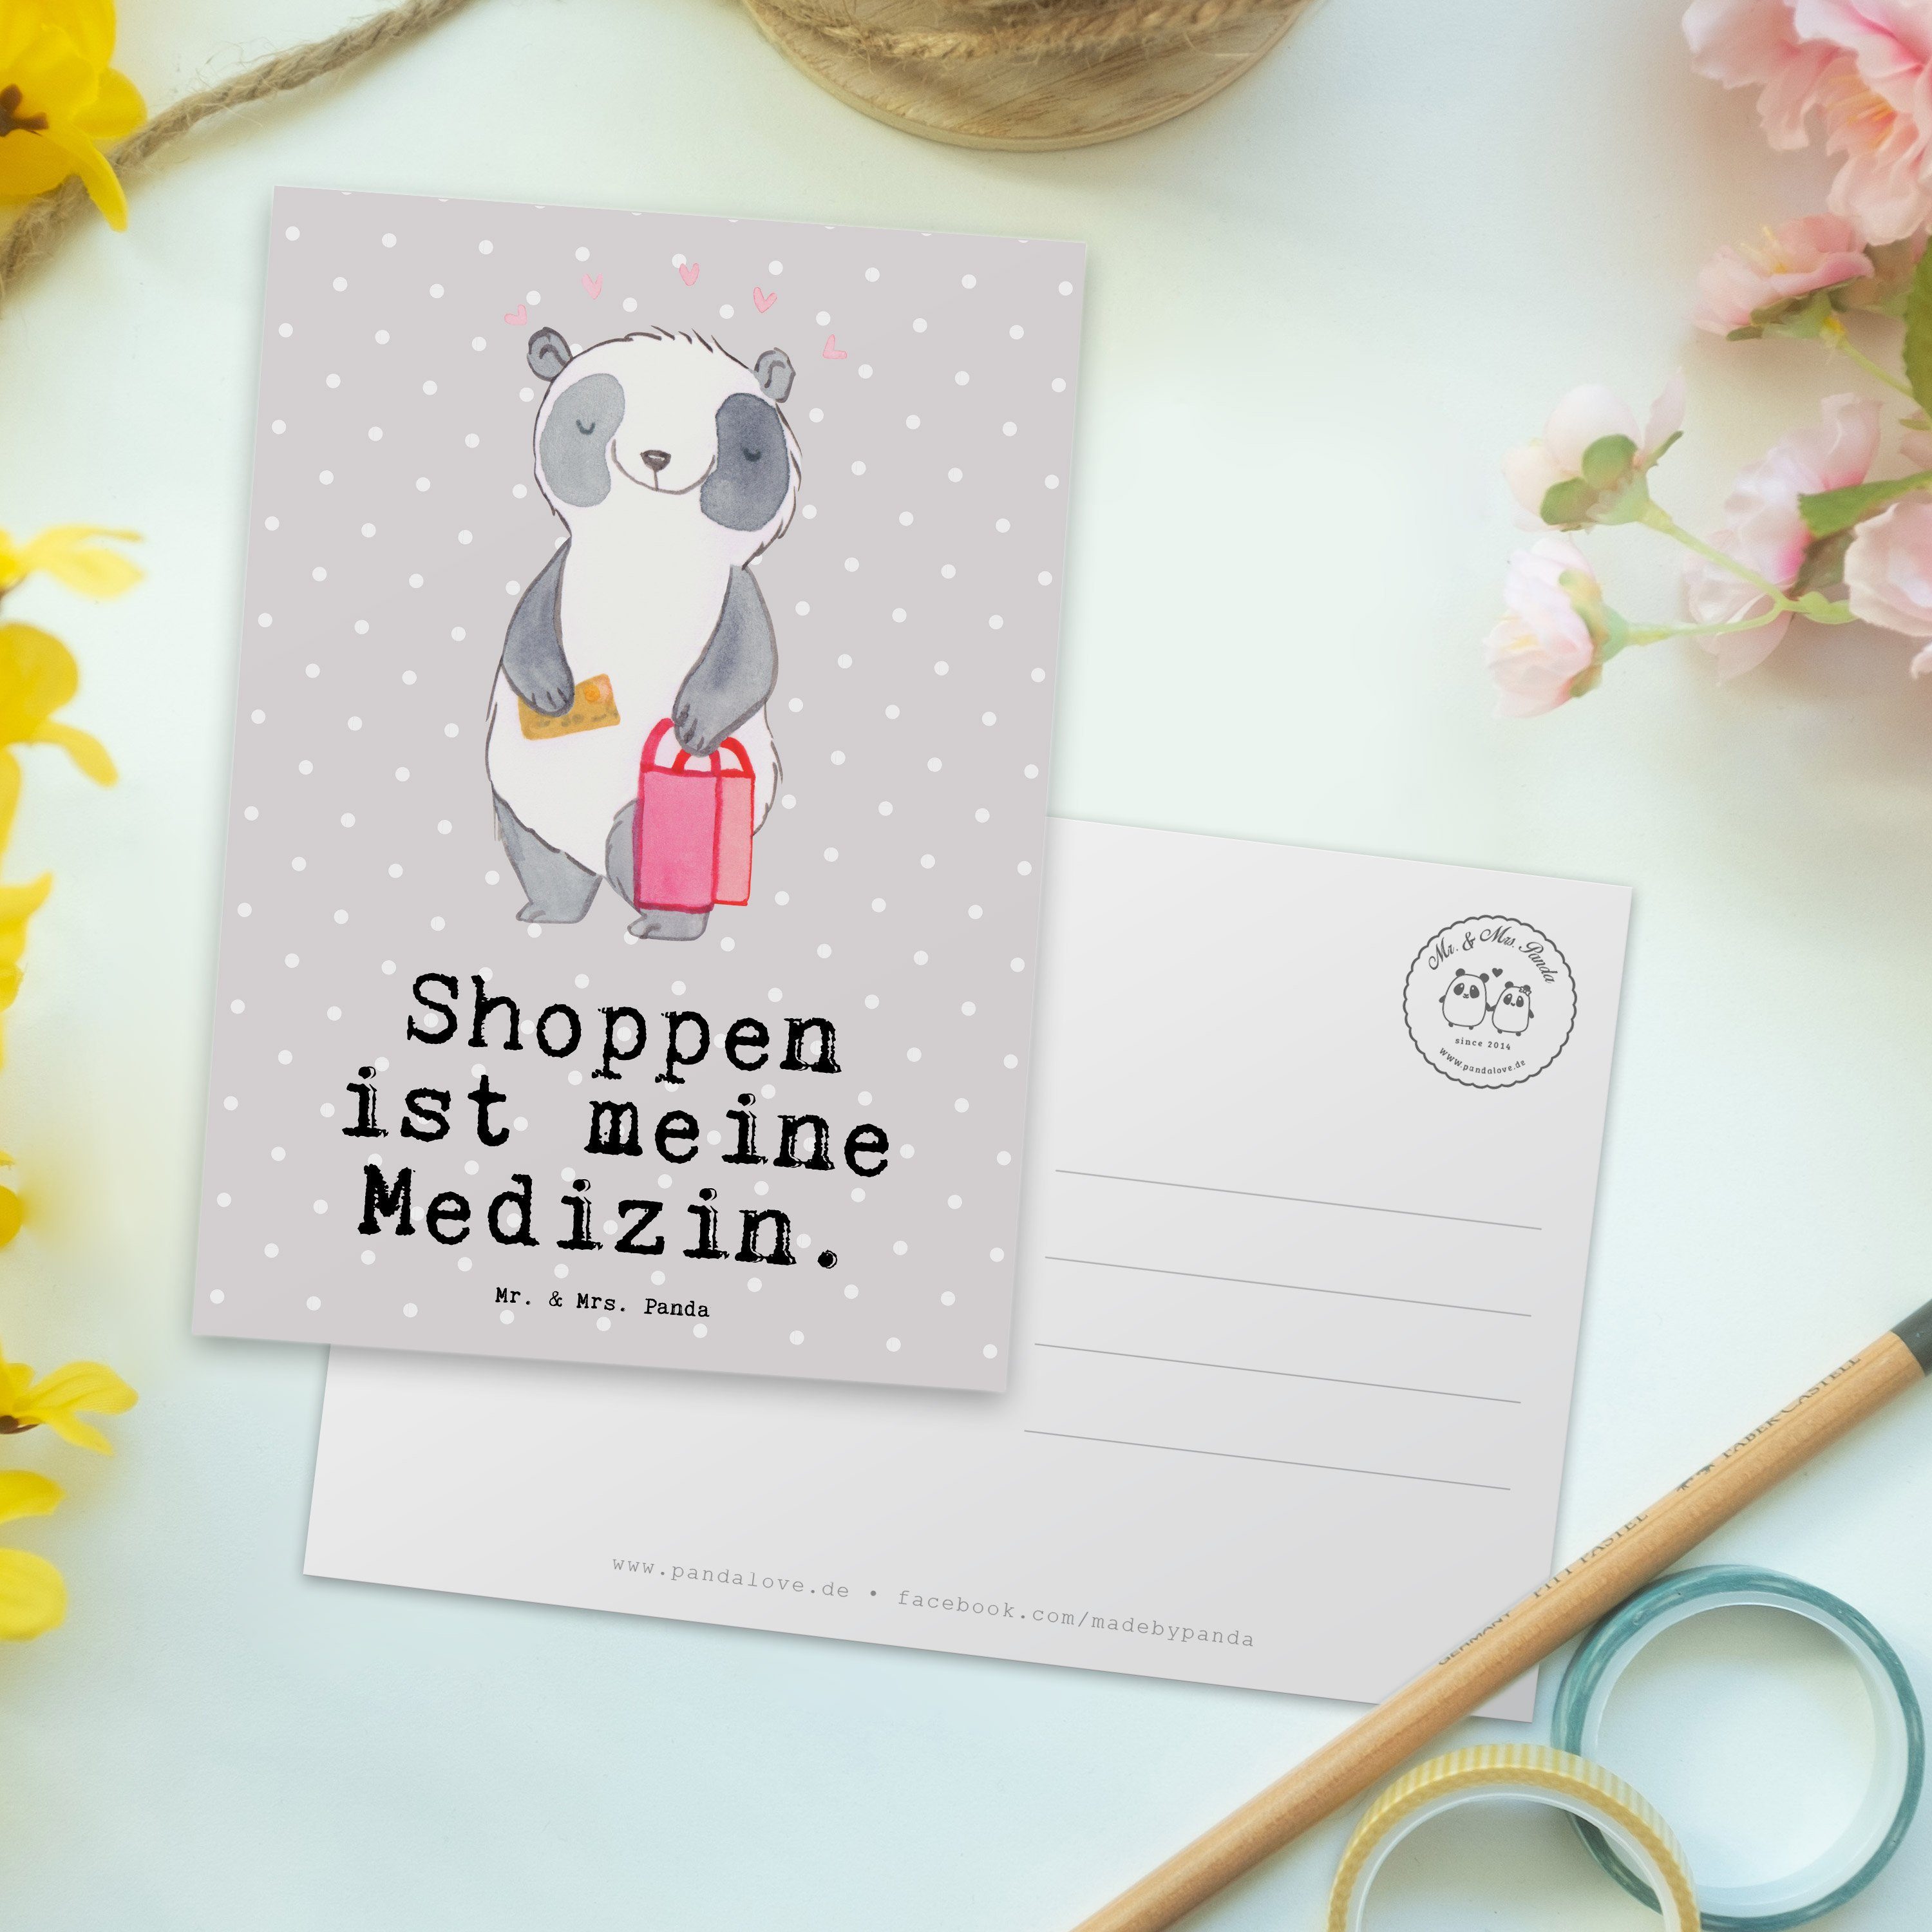 Mr. & Mrs. Panda Postkarte Panda Shopping Medizin - Grau Pastell - Geschenk, Dankeskarte, Ansich